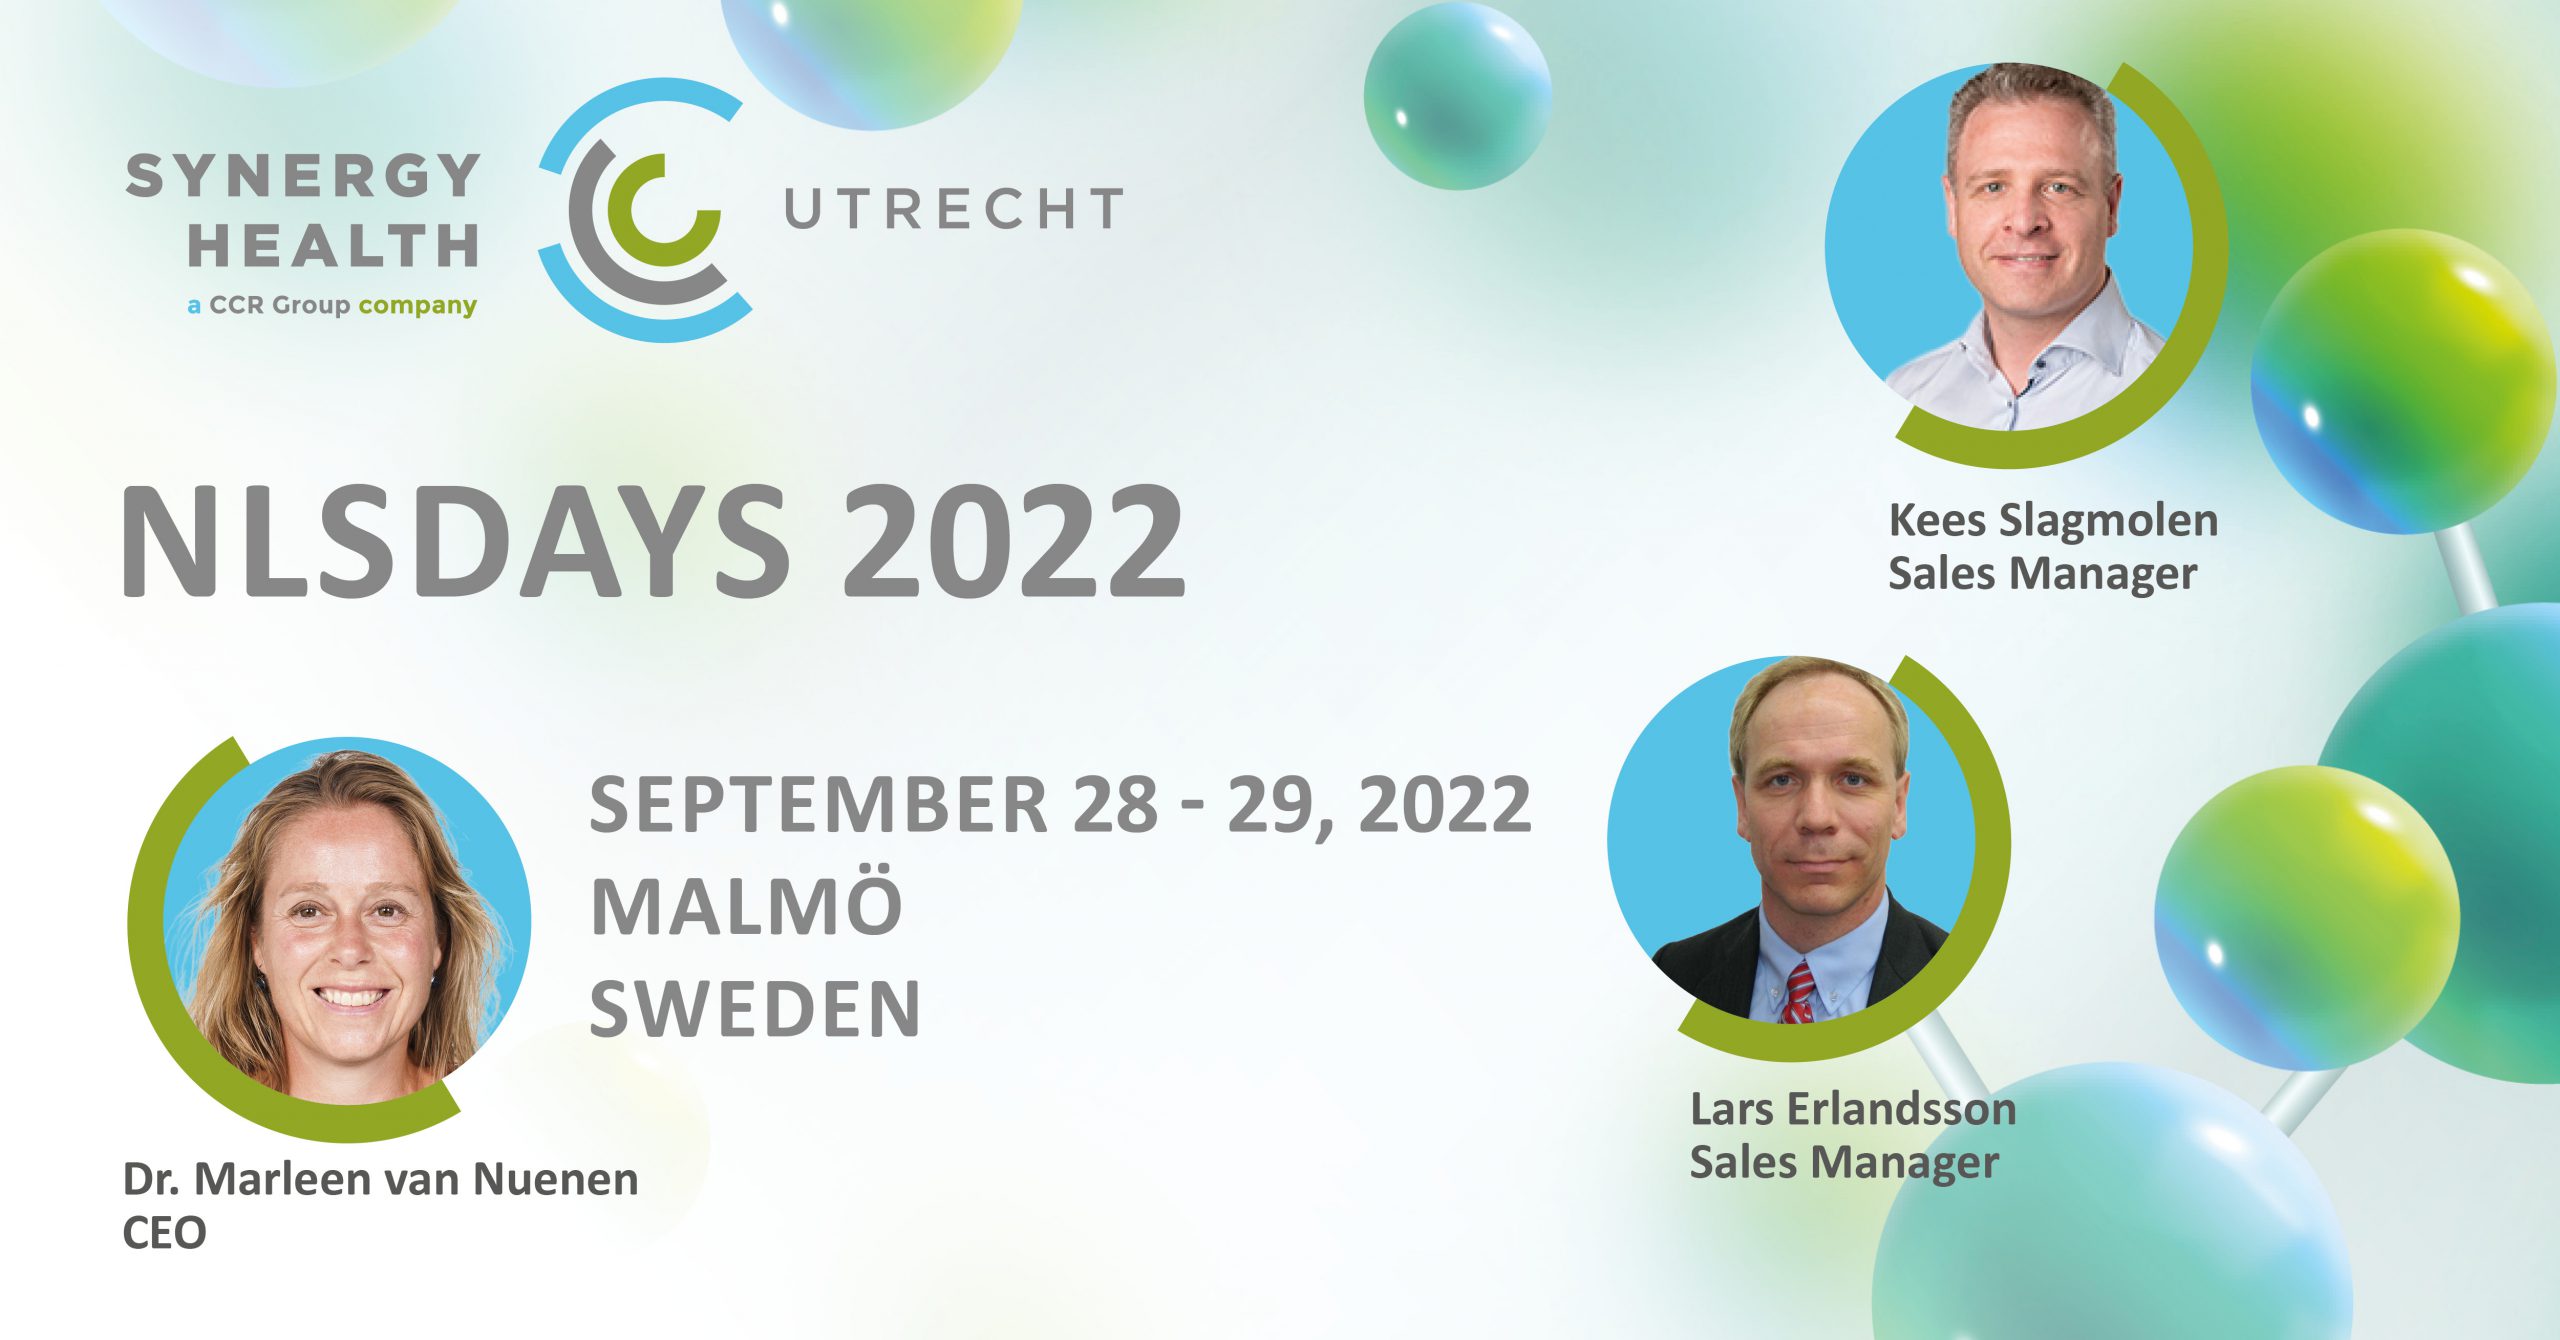 Meet Synergy Health Utrecht at NLSDays 2022